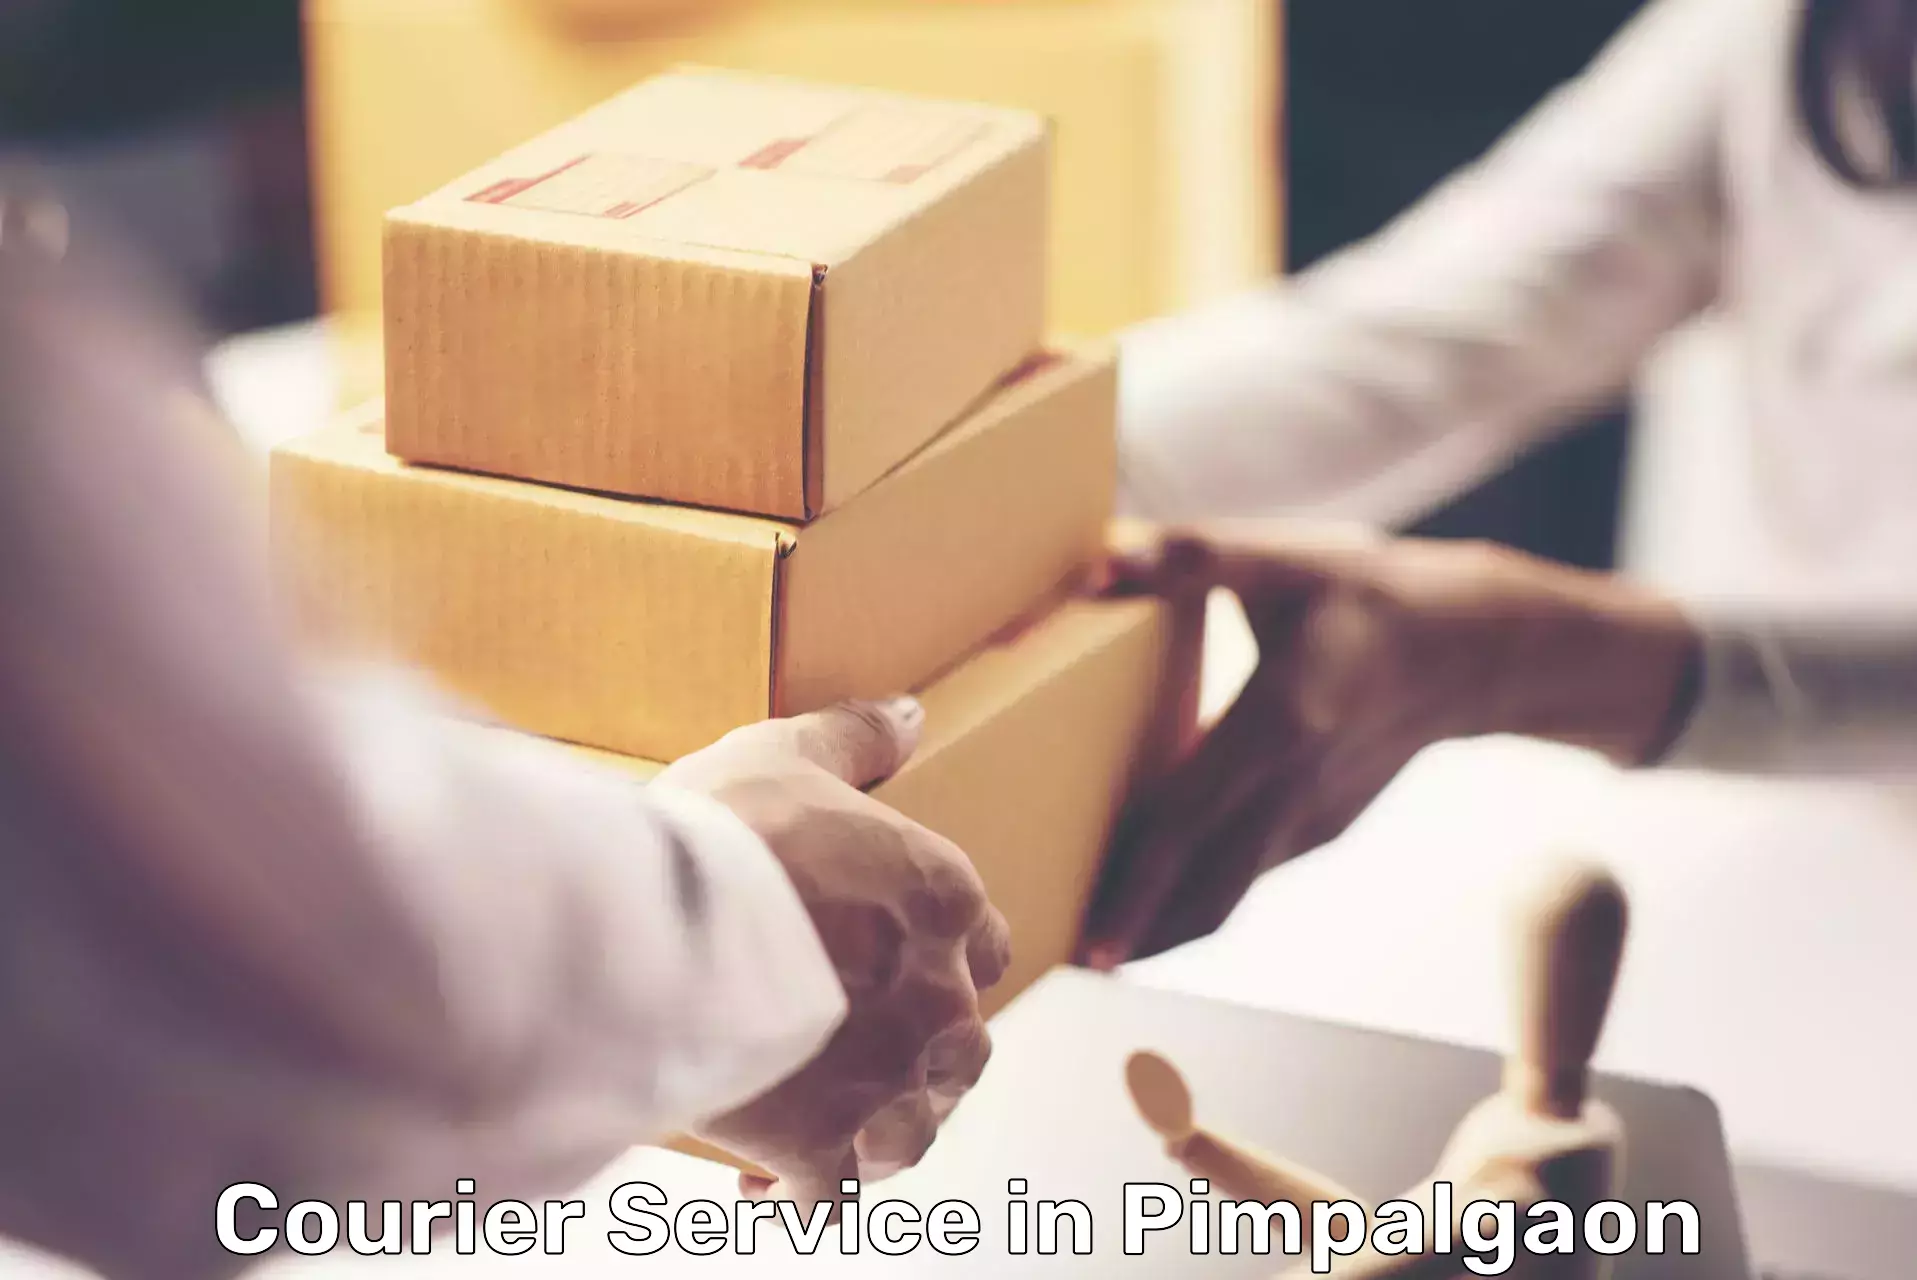 Affordable parcel service in Pimpalgaon